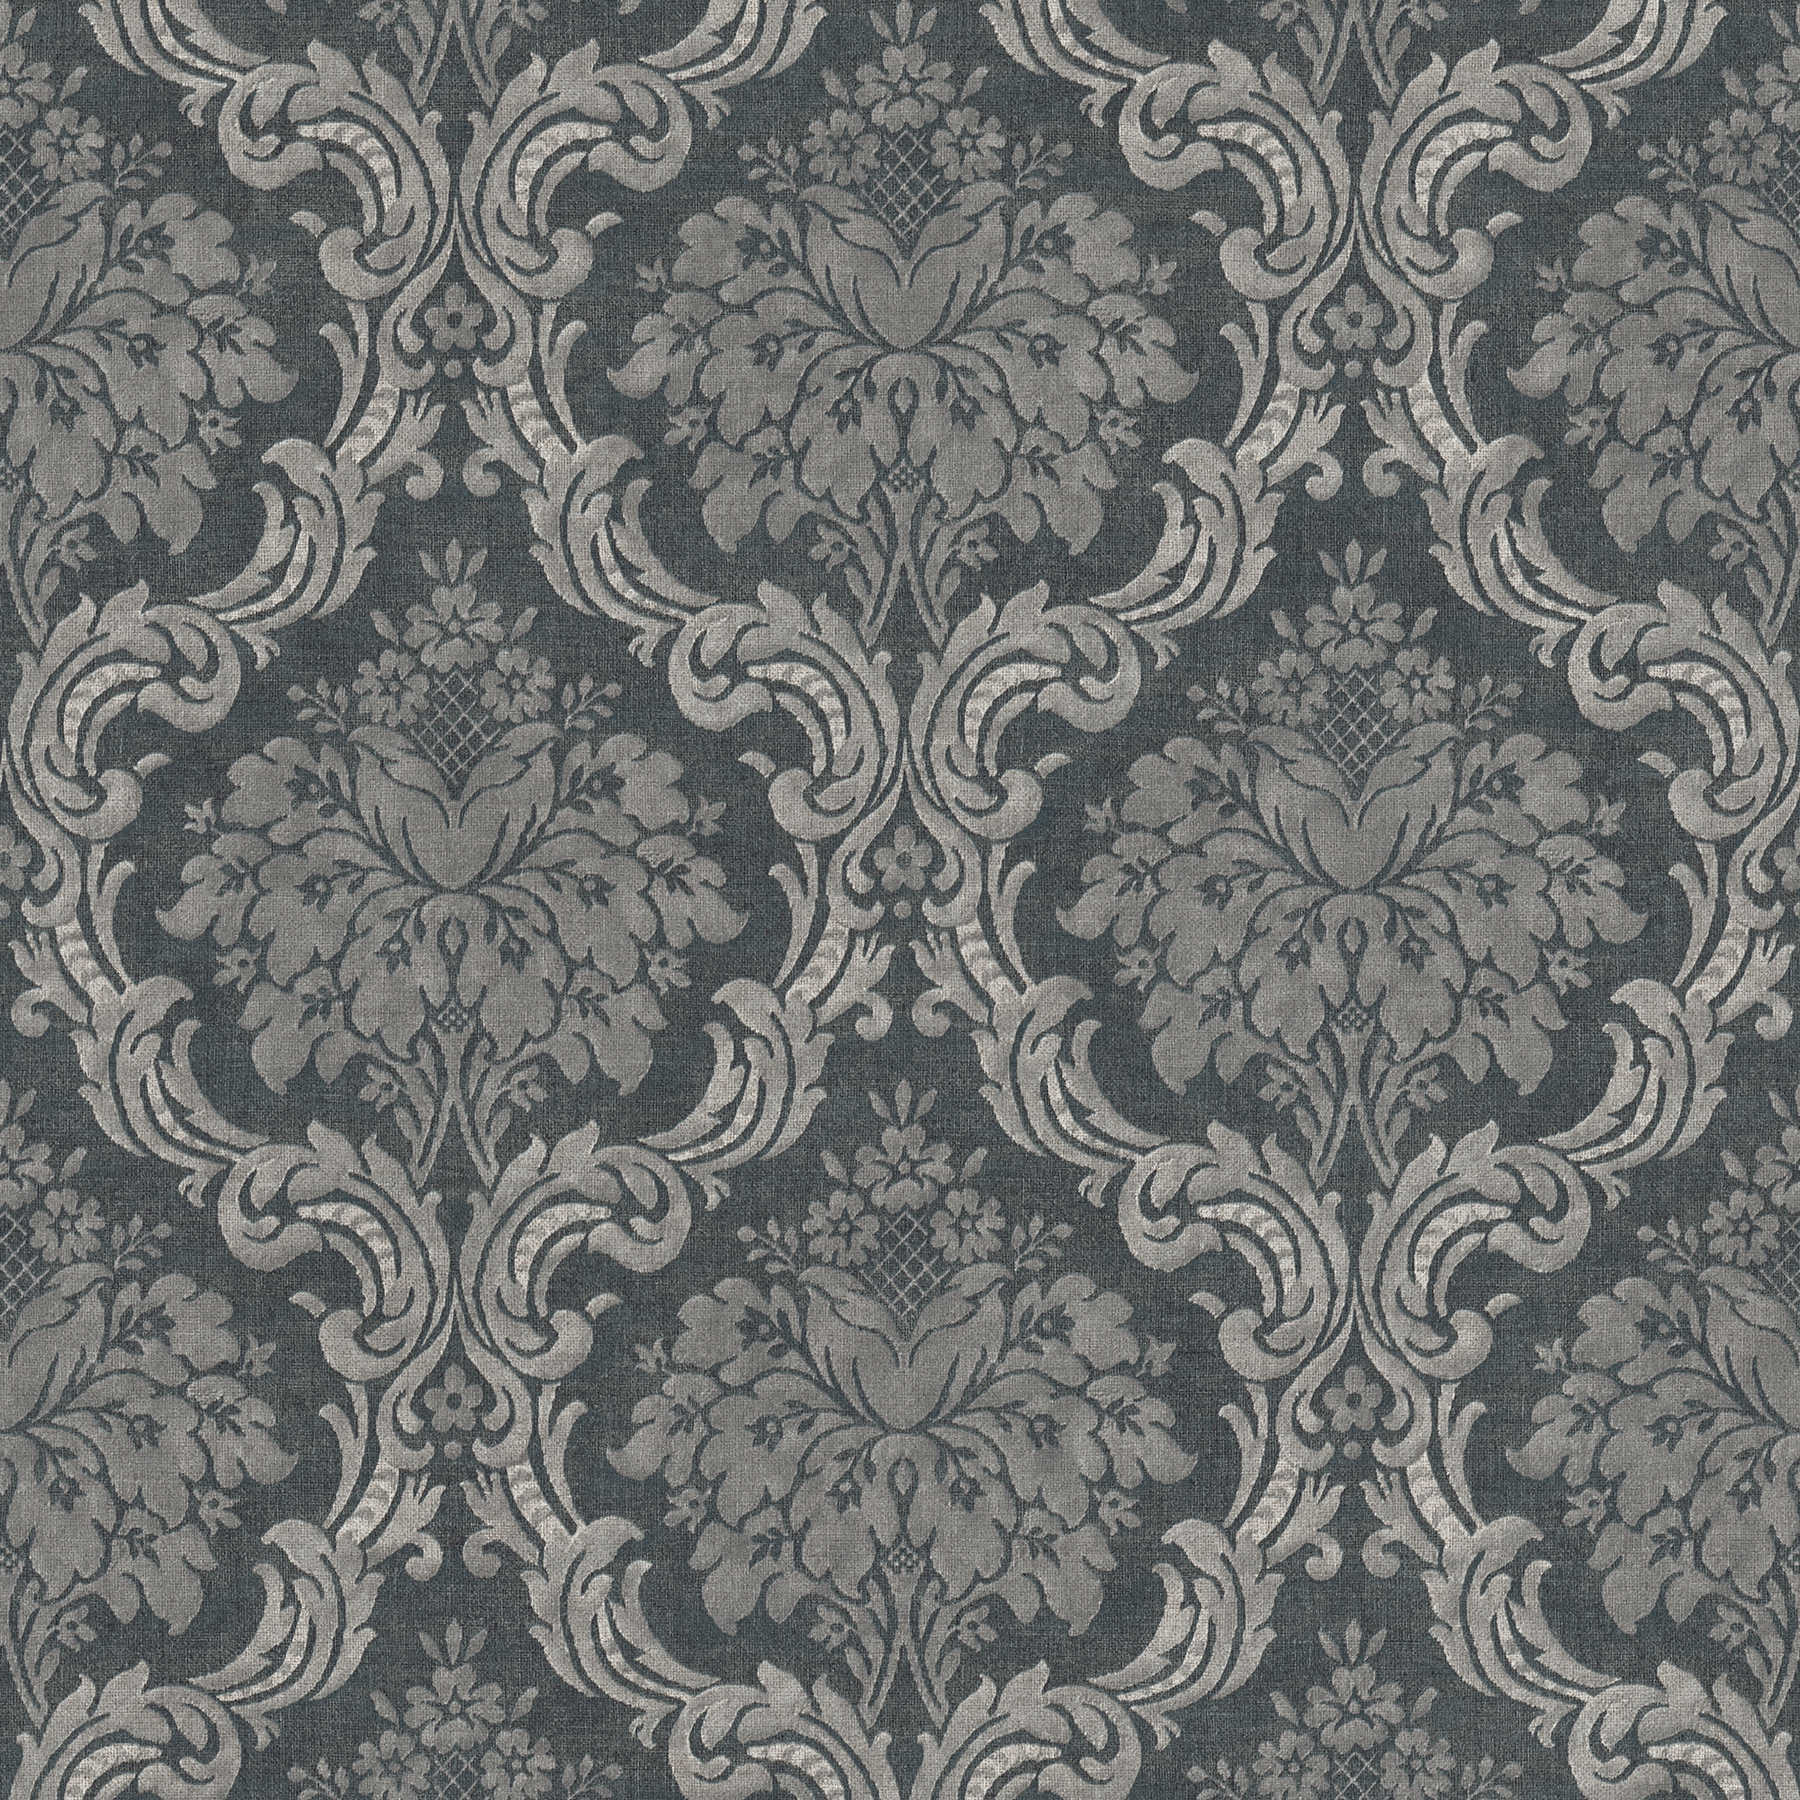         Ornament Tapete mit floralem Korb-Muster – Grau, Schwarz
    